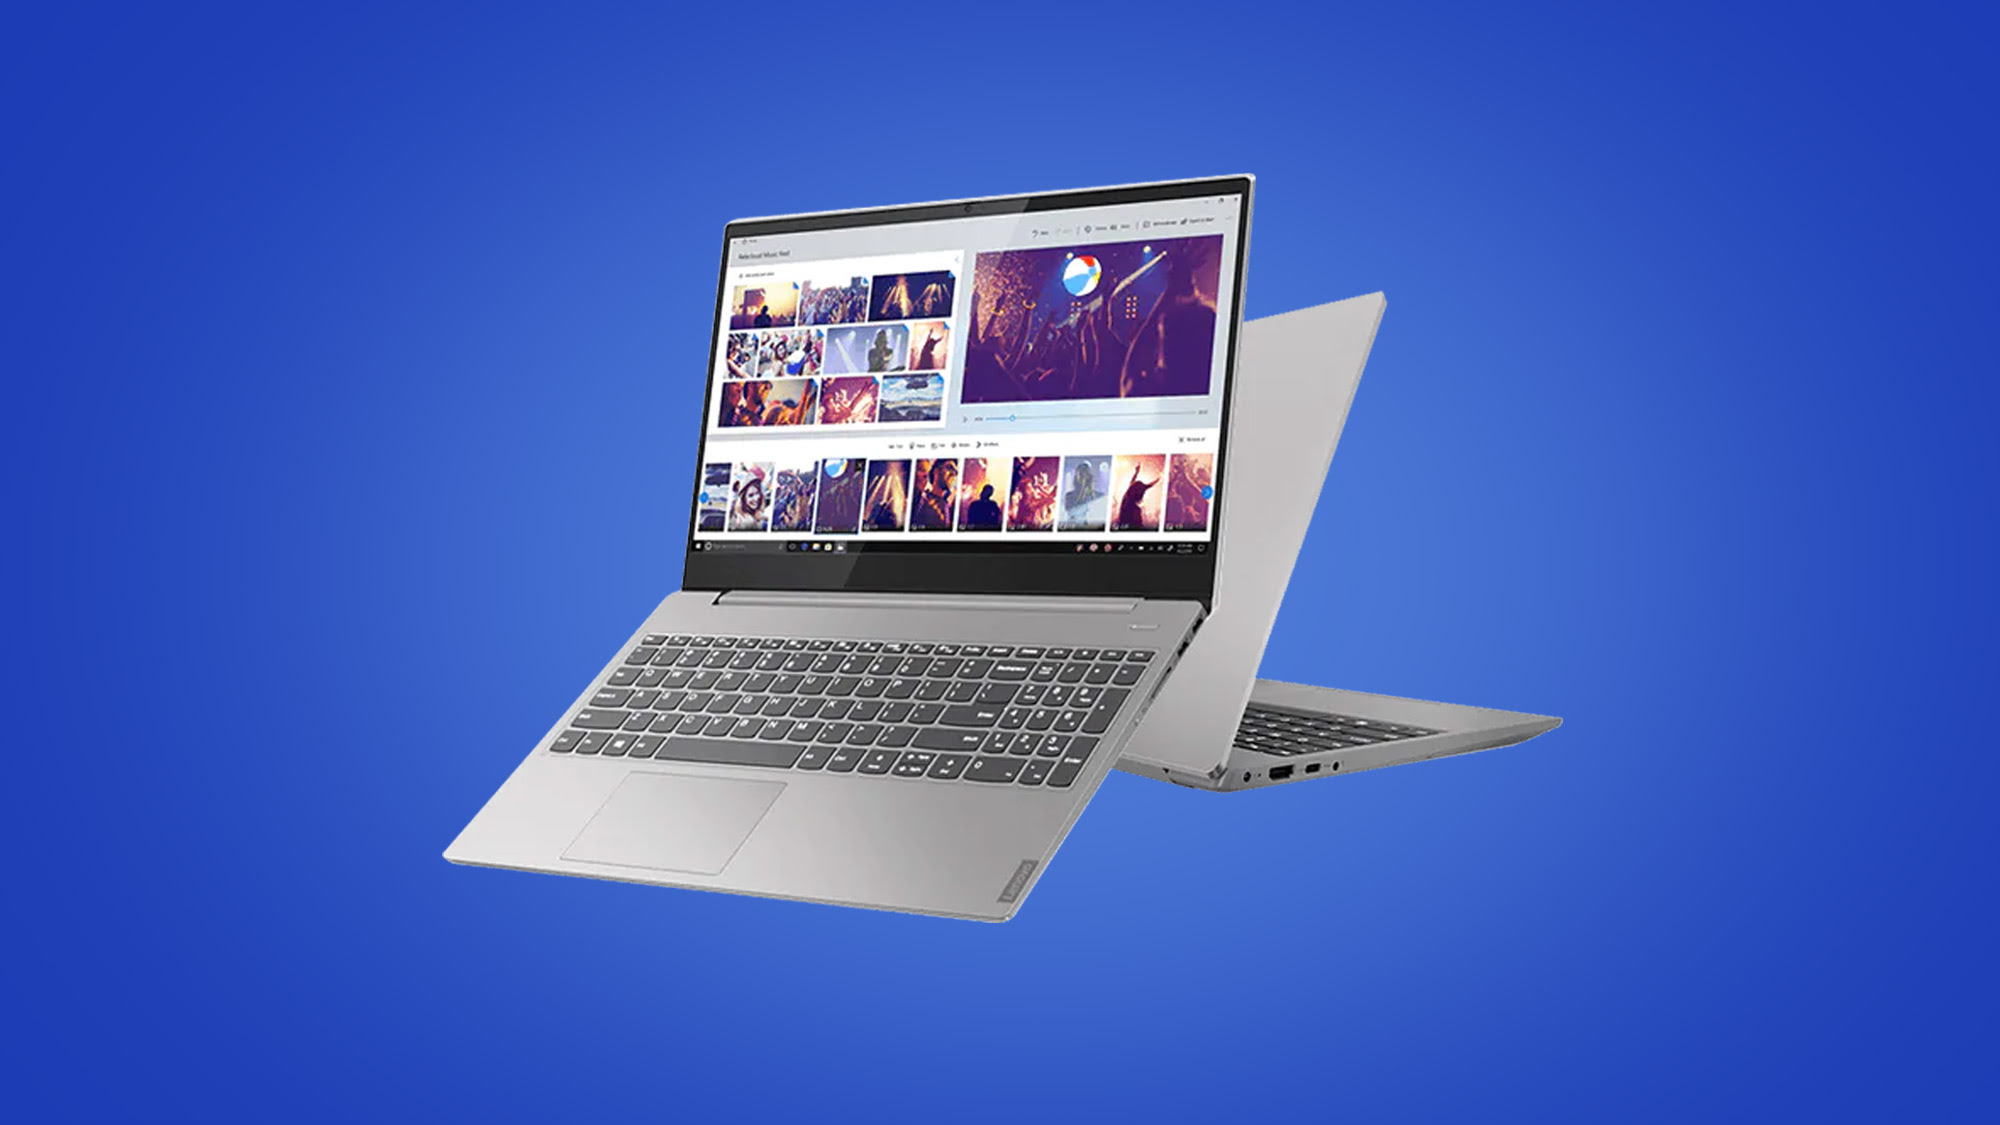 This week's best laptop deals